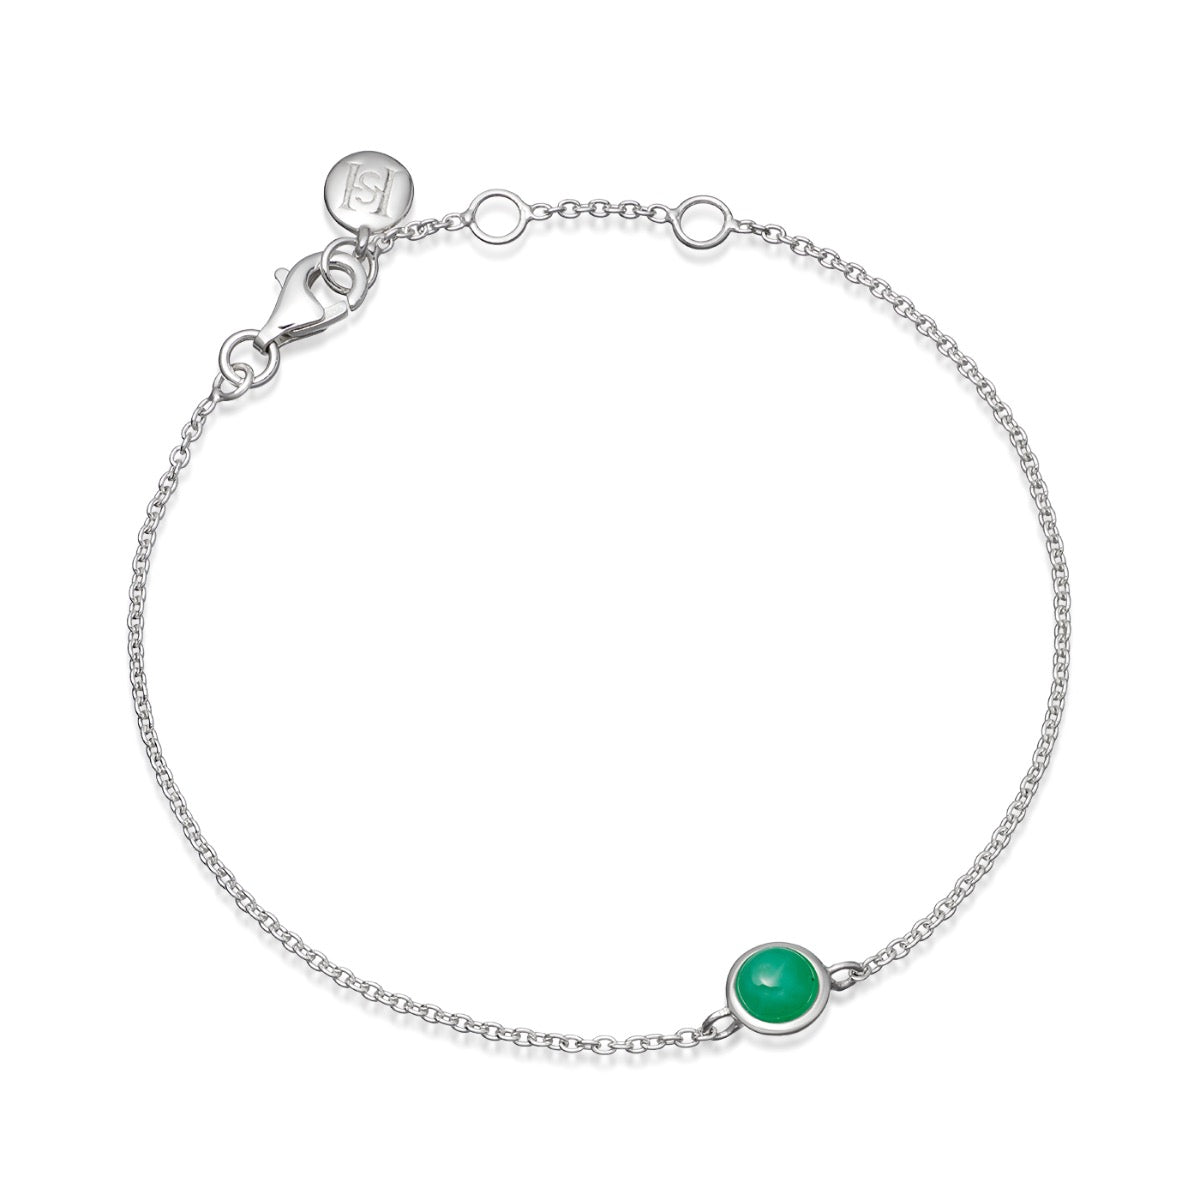 Silver and emerald birthstone bracelet